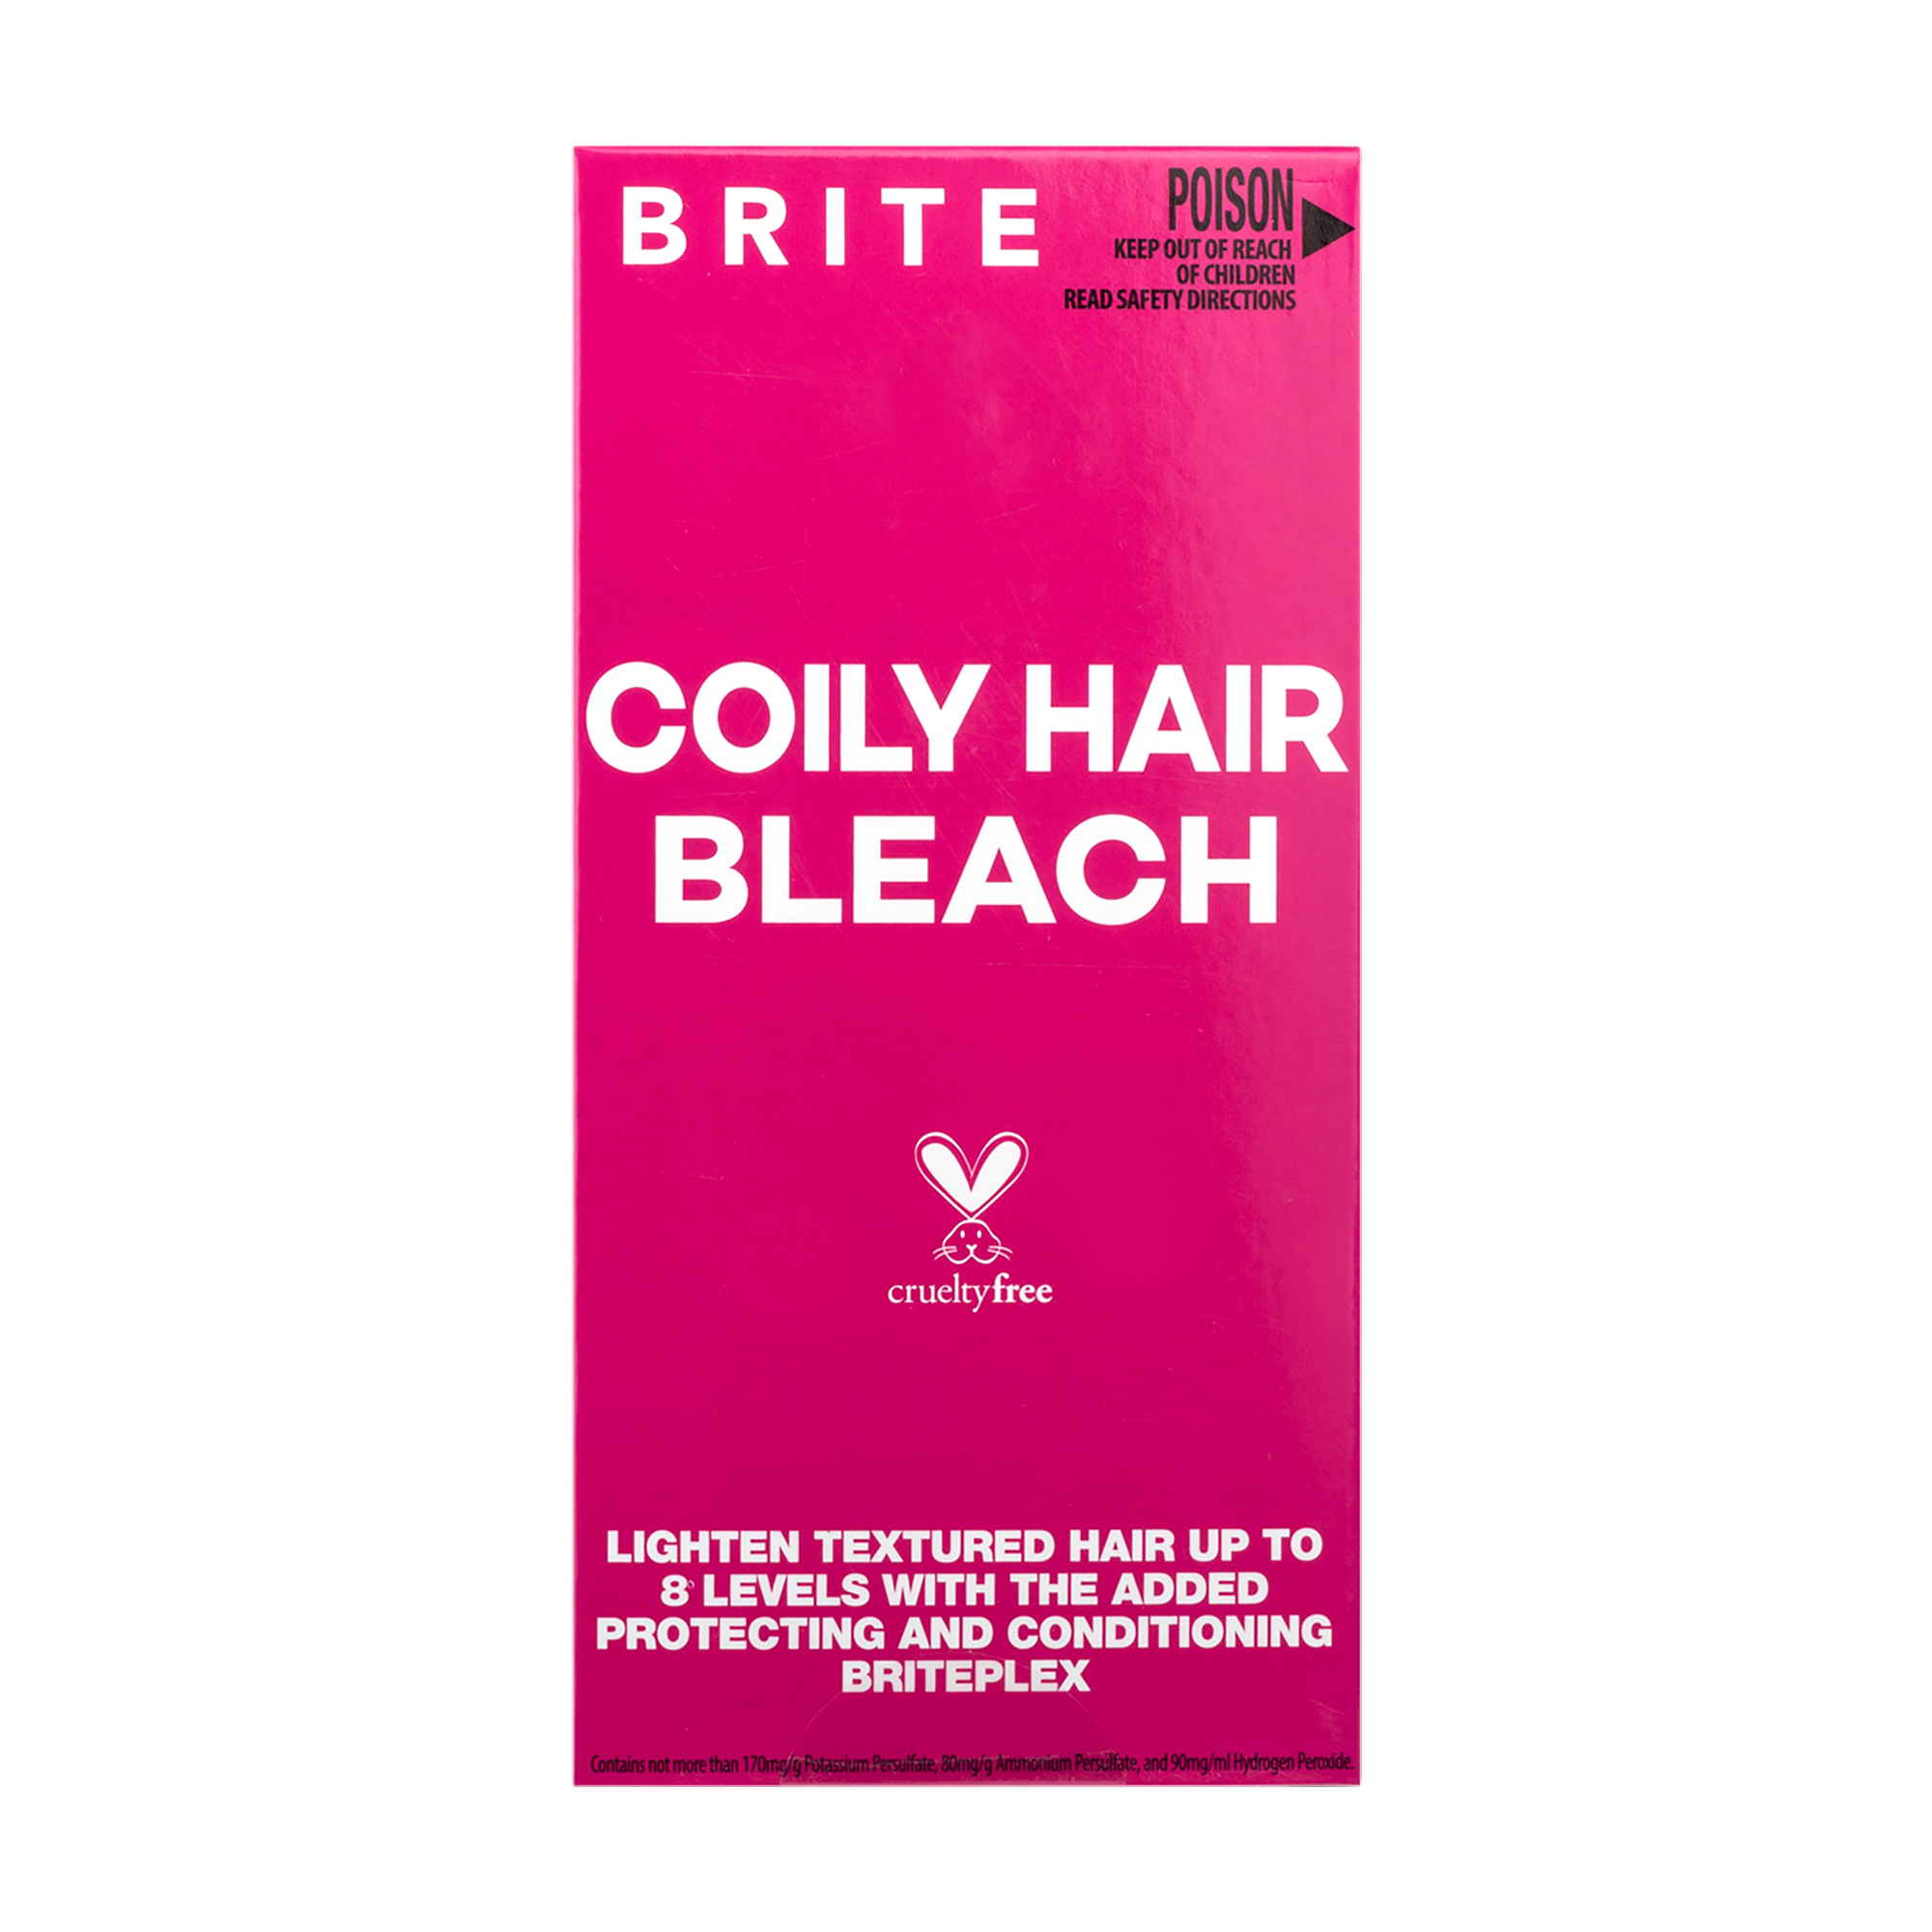 BRITE Coily Hair Bleach for Textured or Curly hair, Dust-Free, Ammonia-Free, Vegan, Cruelty Free, Cream Bleach Formula, 8.4 oz - image 4 of 6